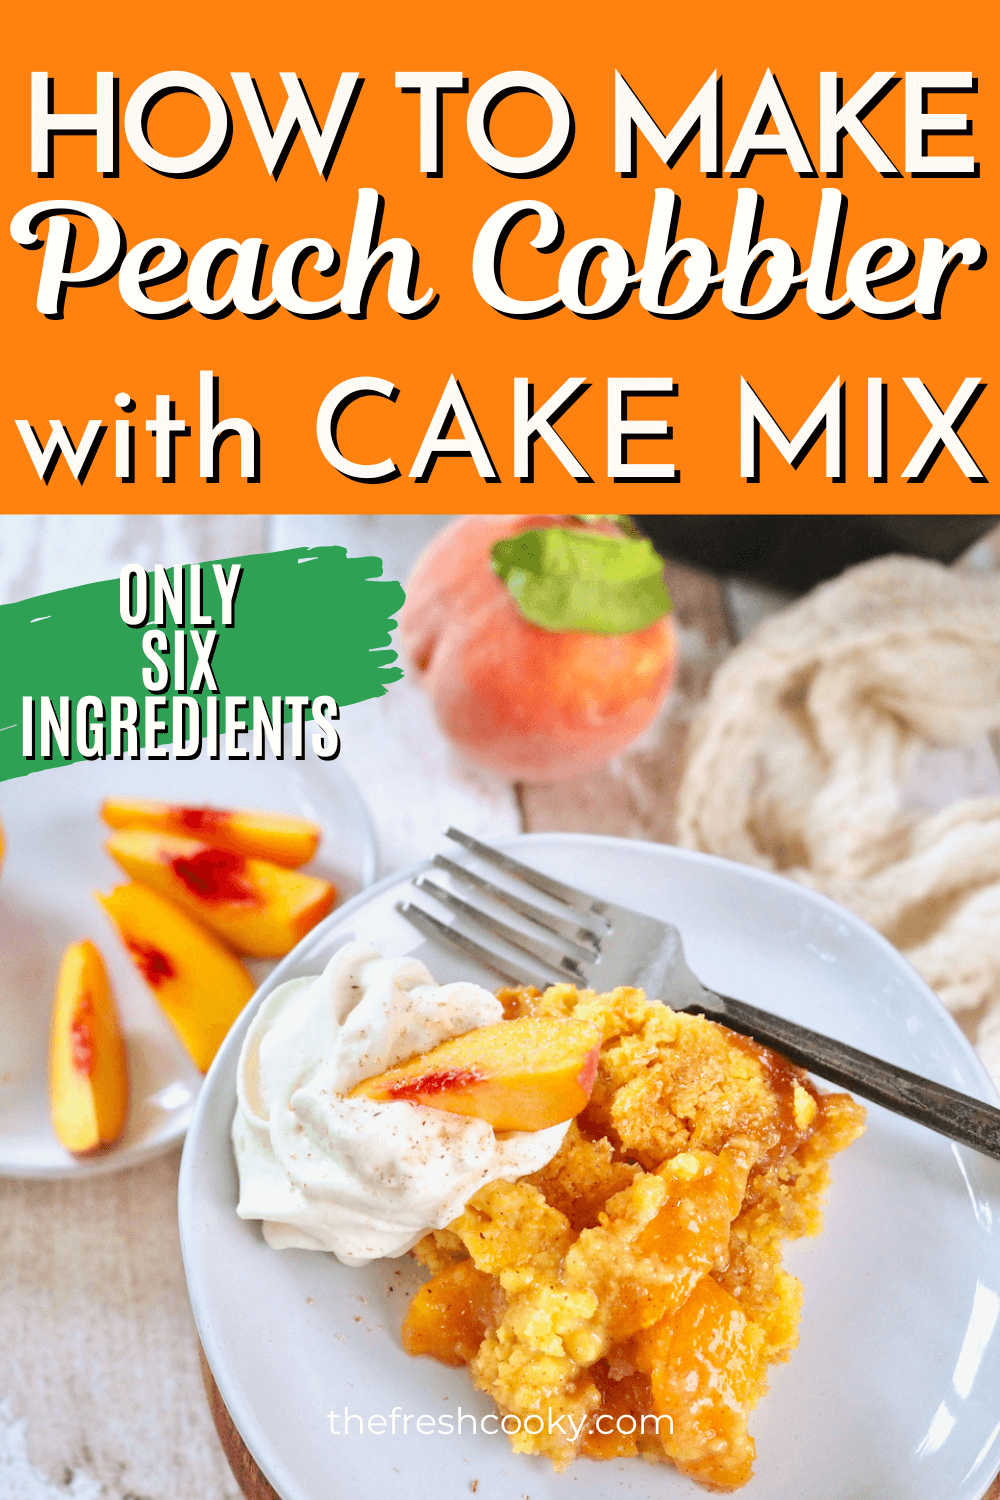 Peach cobbler dump cake using cake mix to pin.